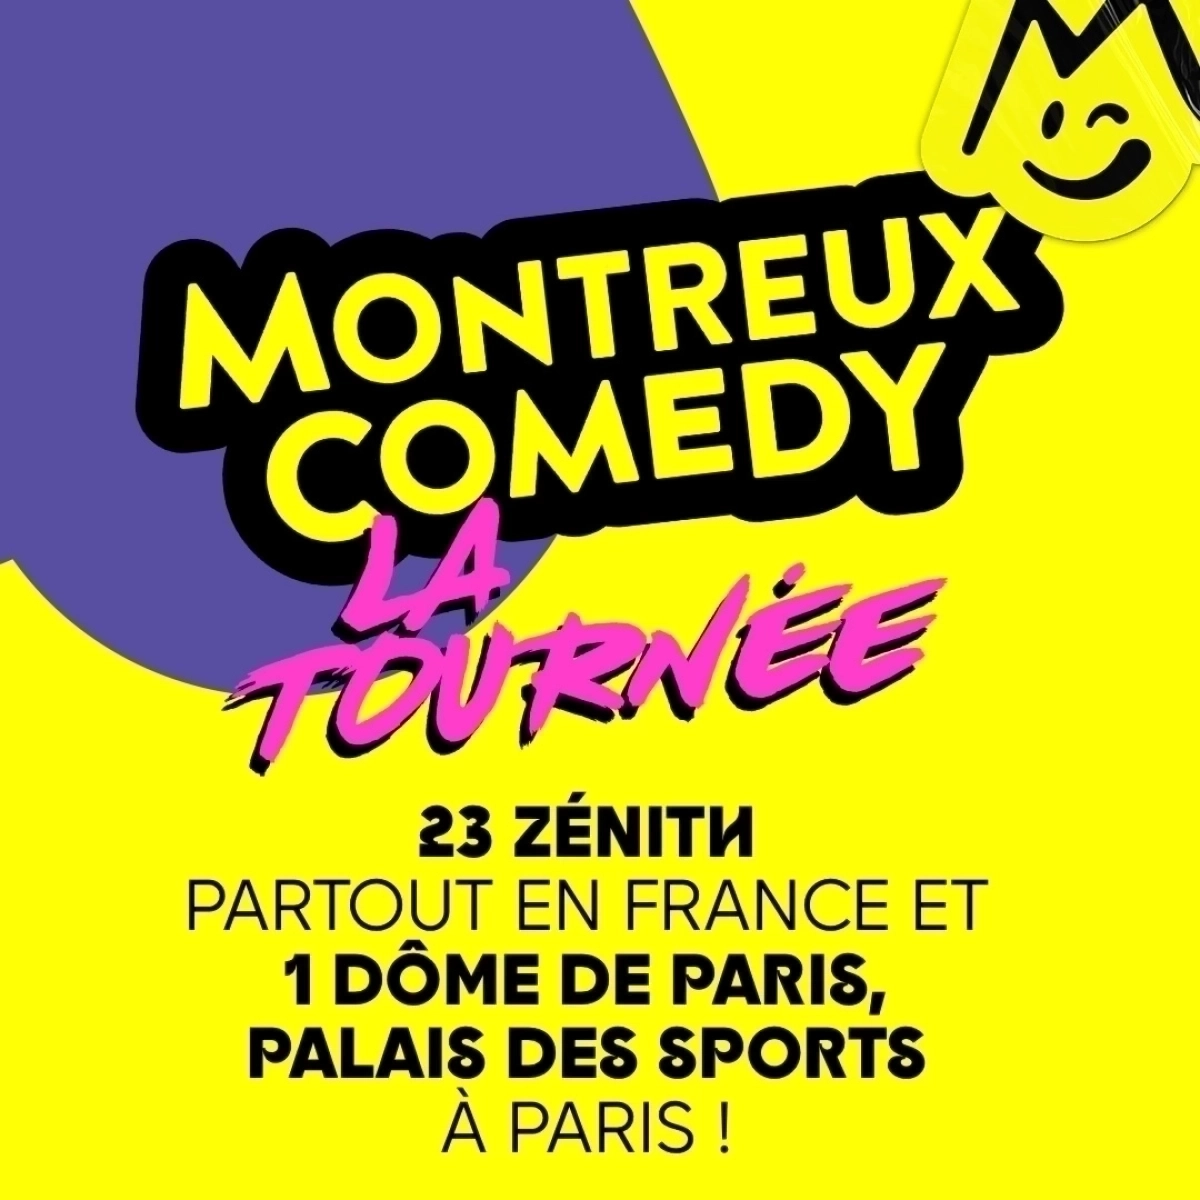 Montreux Comedy at Arena Futuroscope Tickets